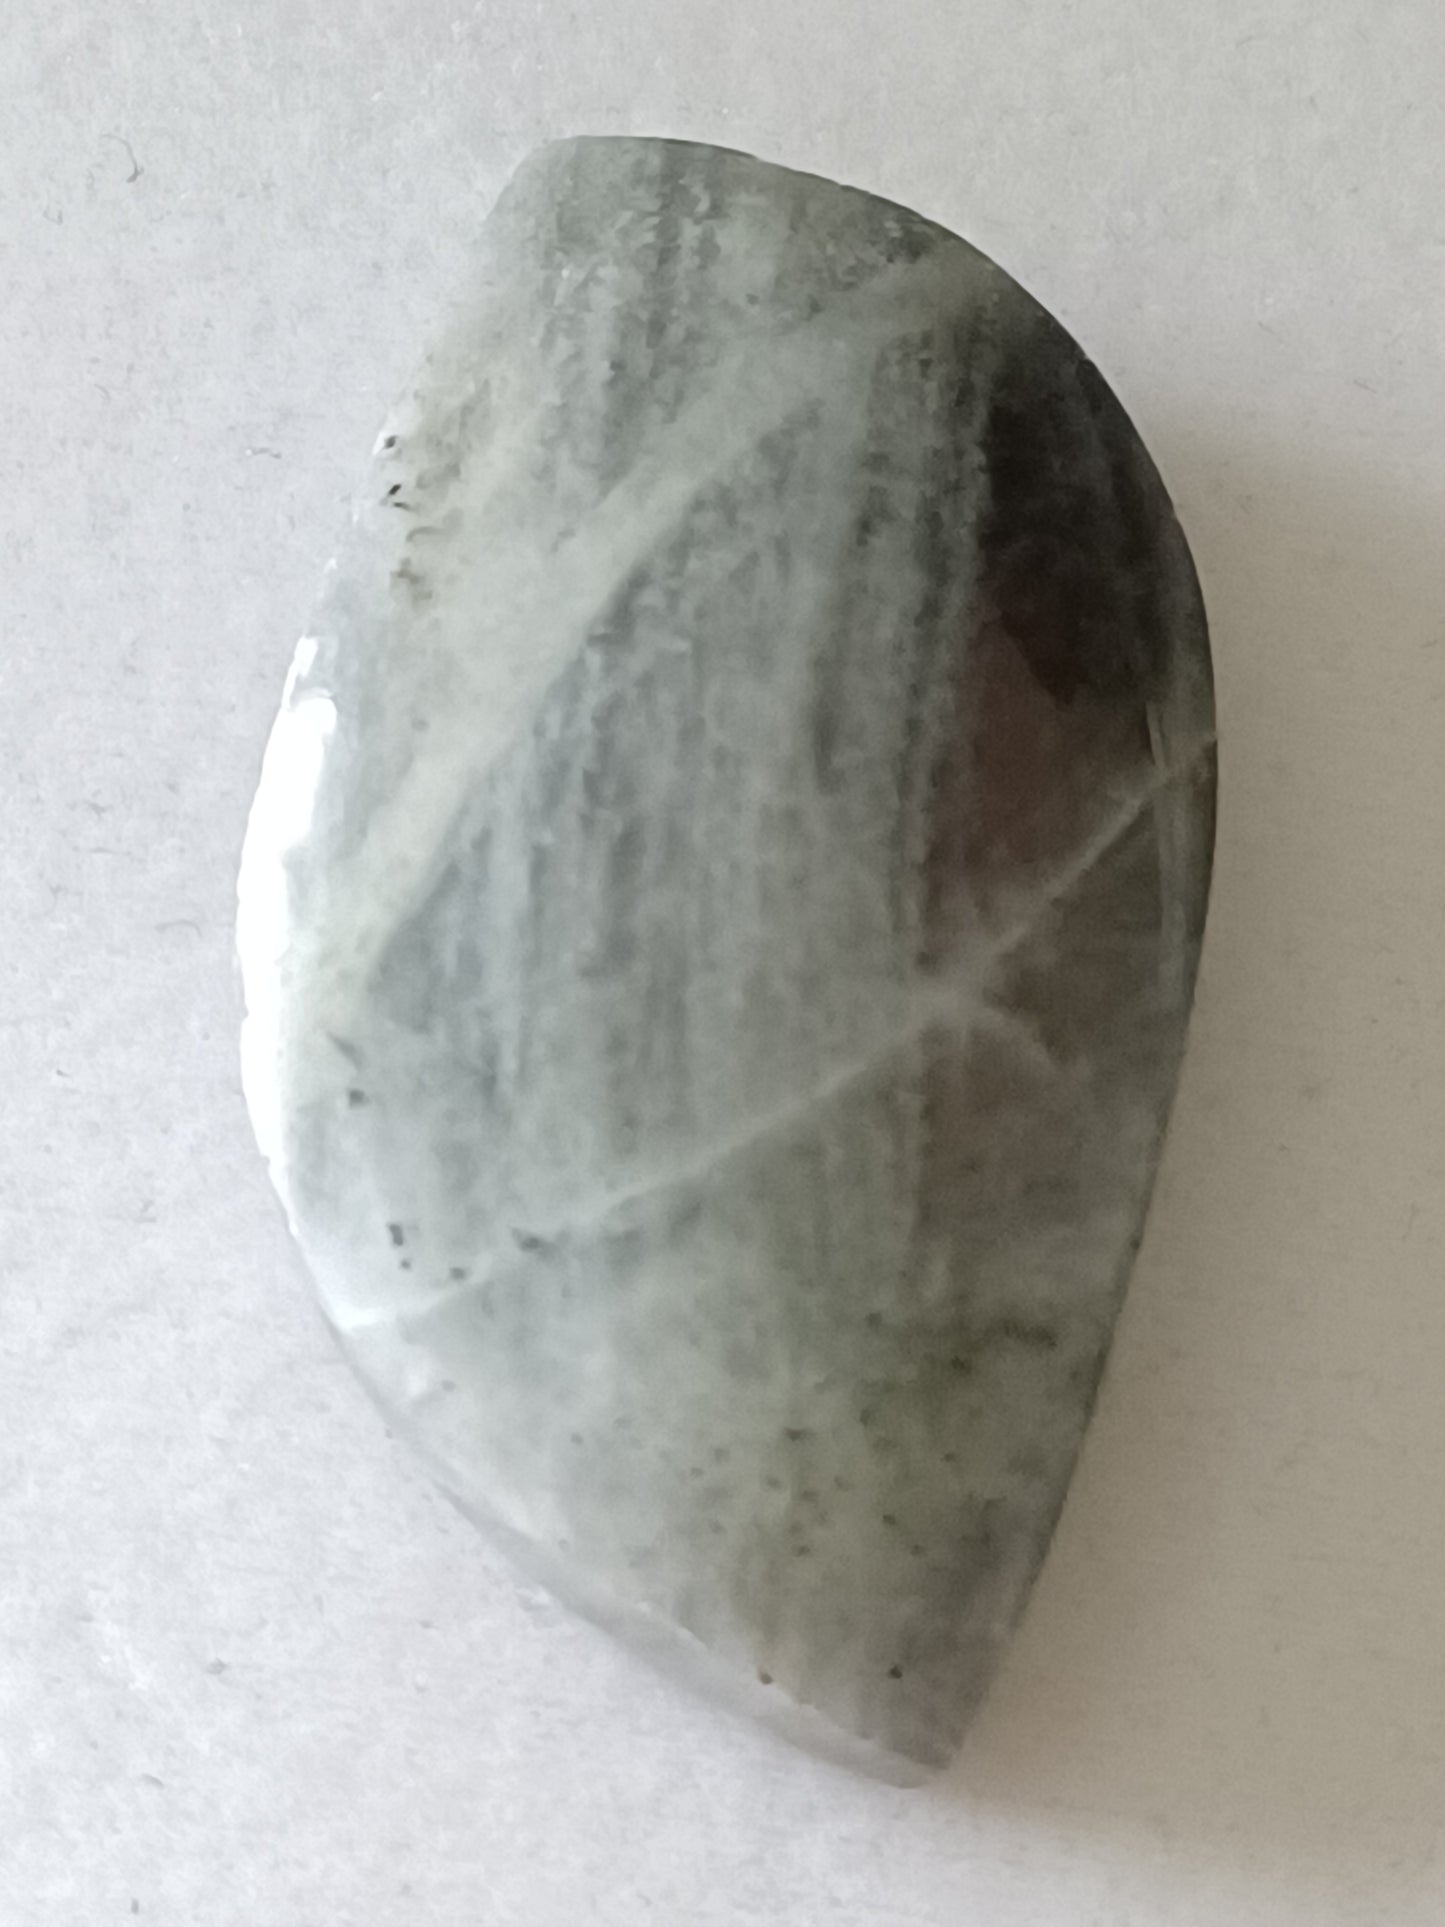 Labradorite Stone